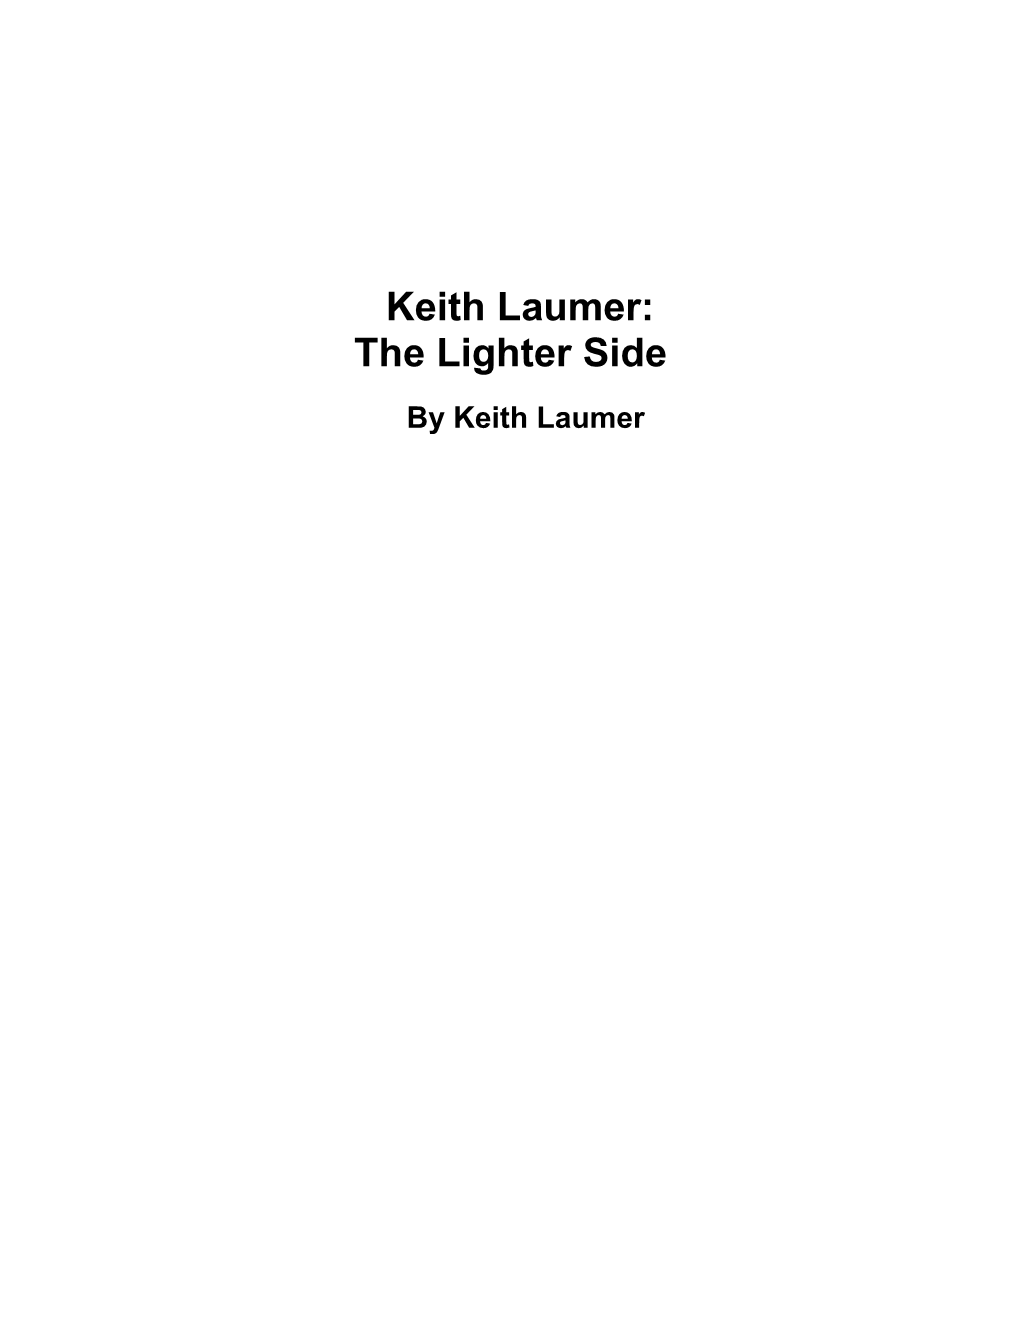 Keith Laumer: the Lighter Side